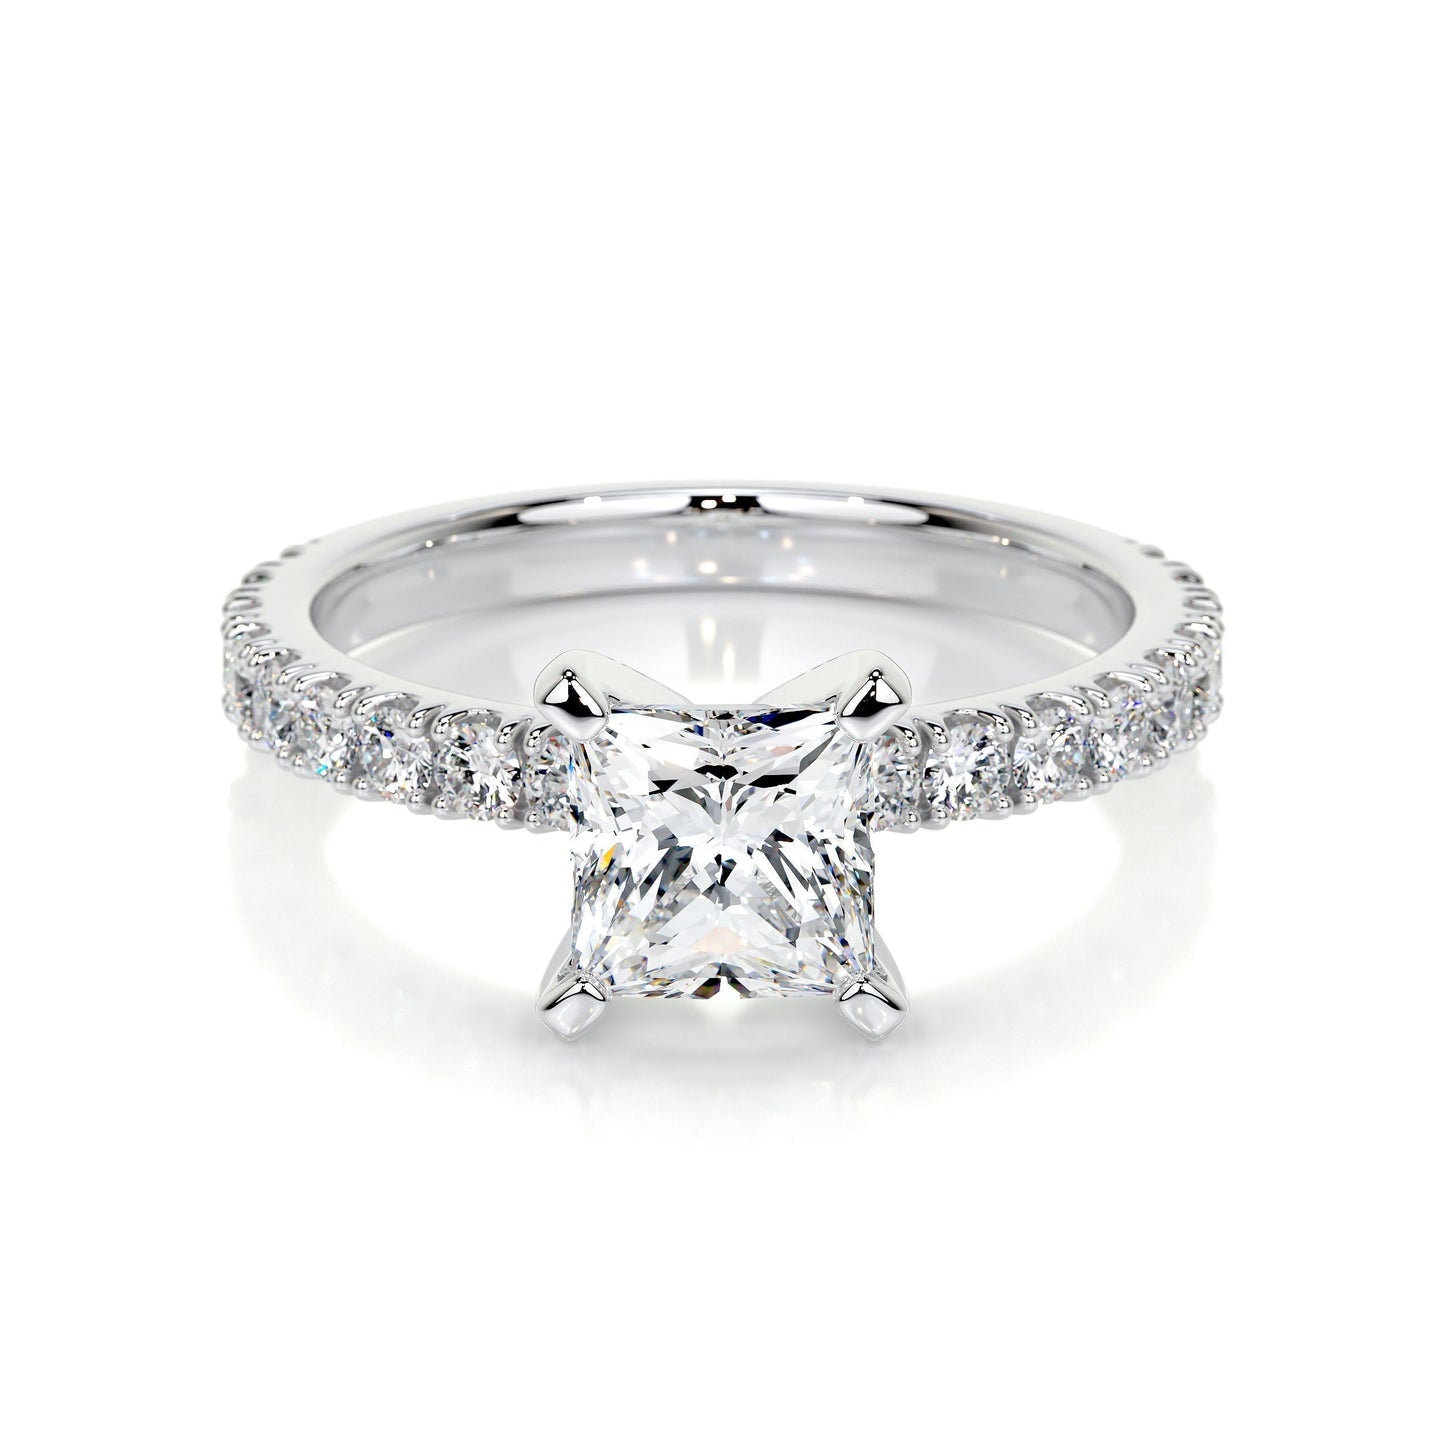 1.0 CT Princess Solitaire CVD D/VS1 Diamond Engagement Ring 1